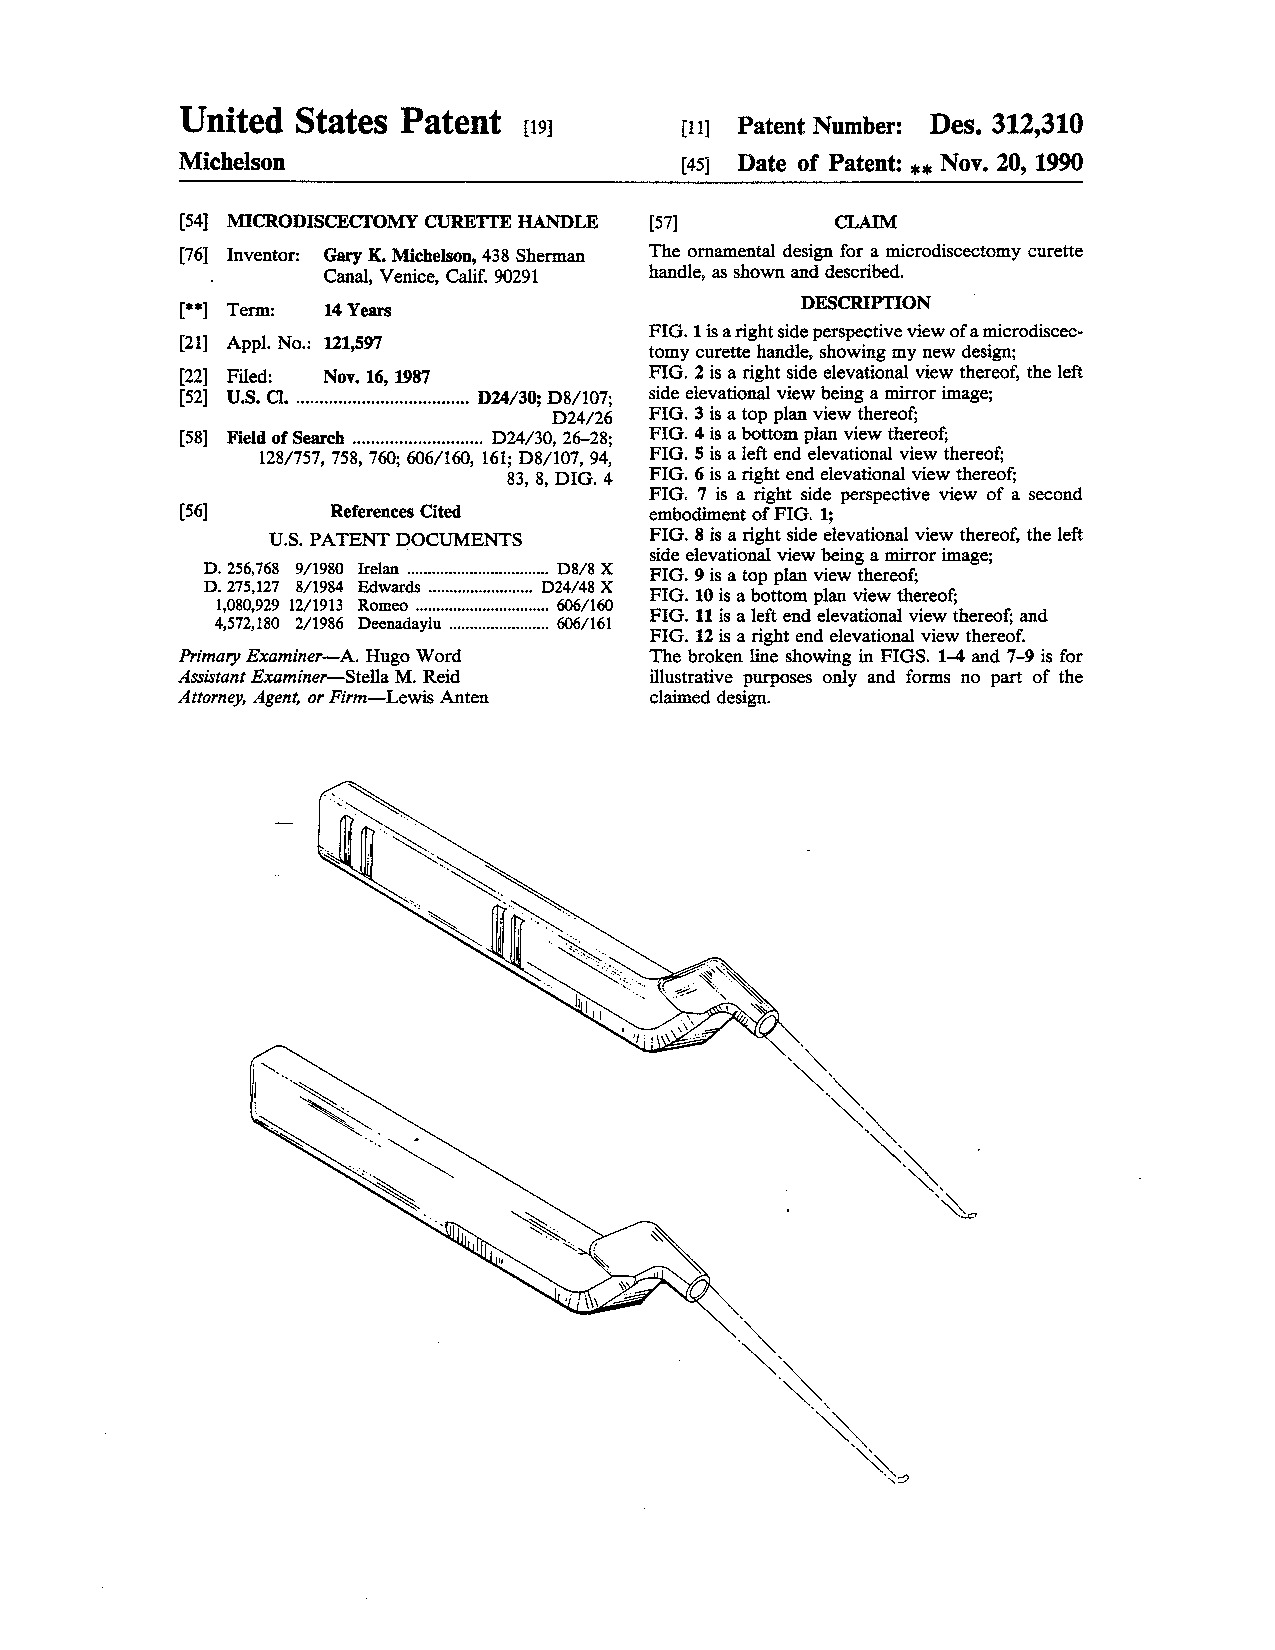 Microdiscectomy curette handle - Patent D312,310